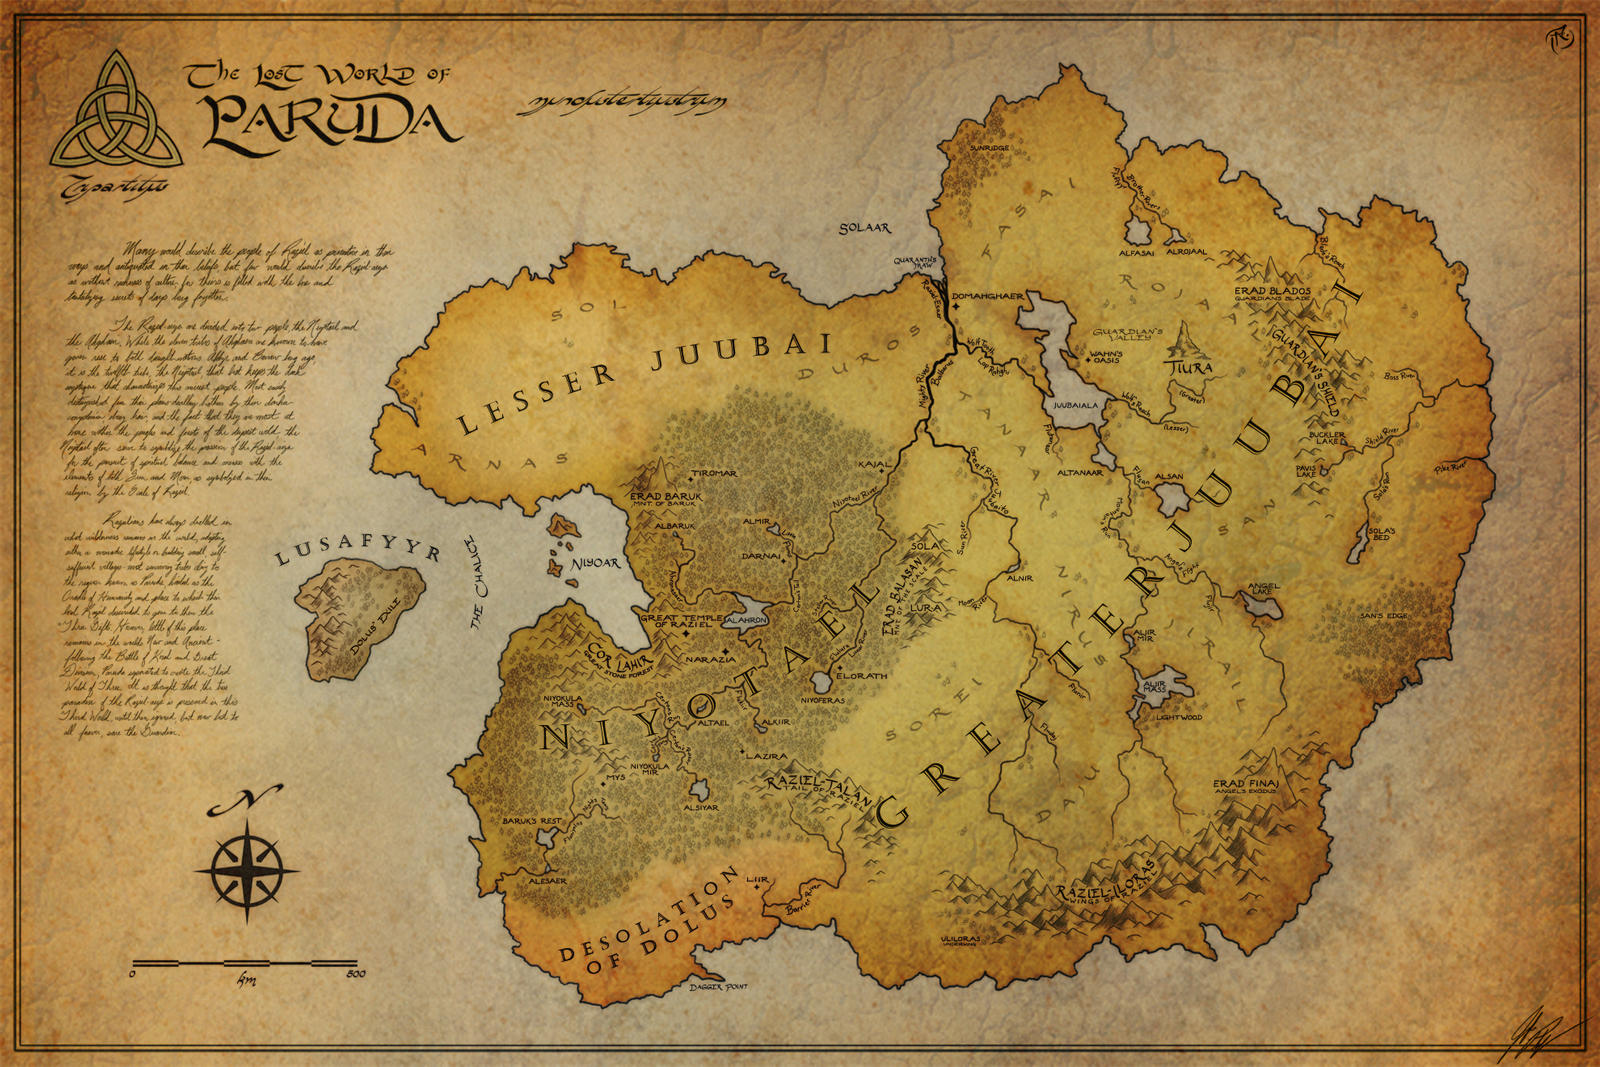 The Lost World Paruda - Map